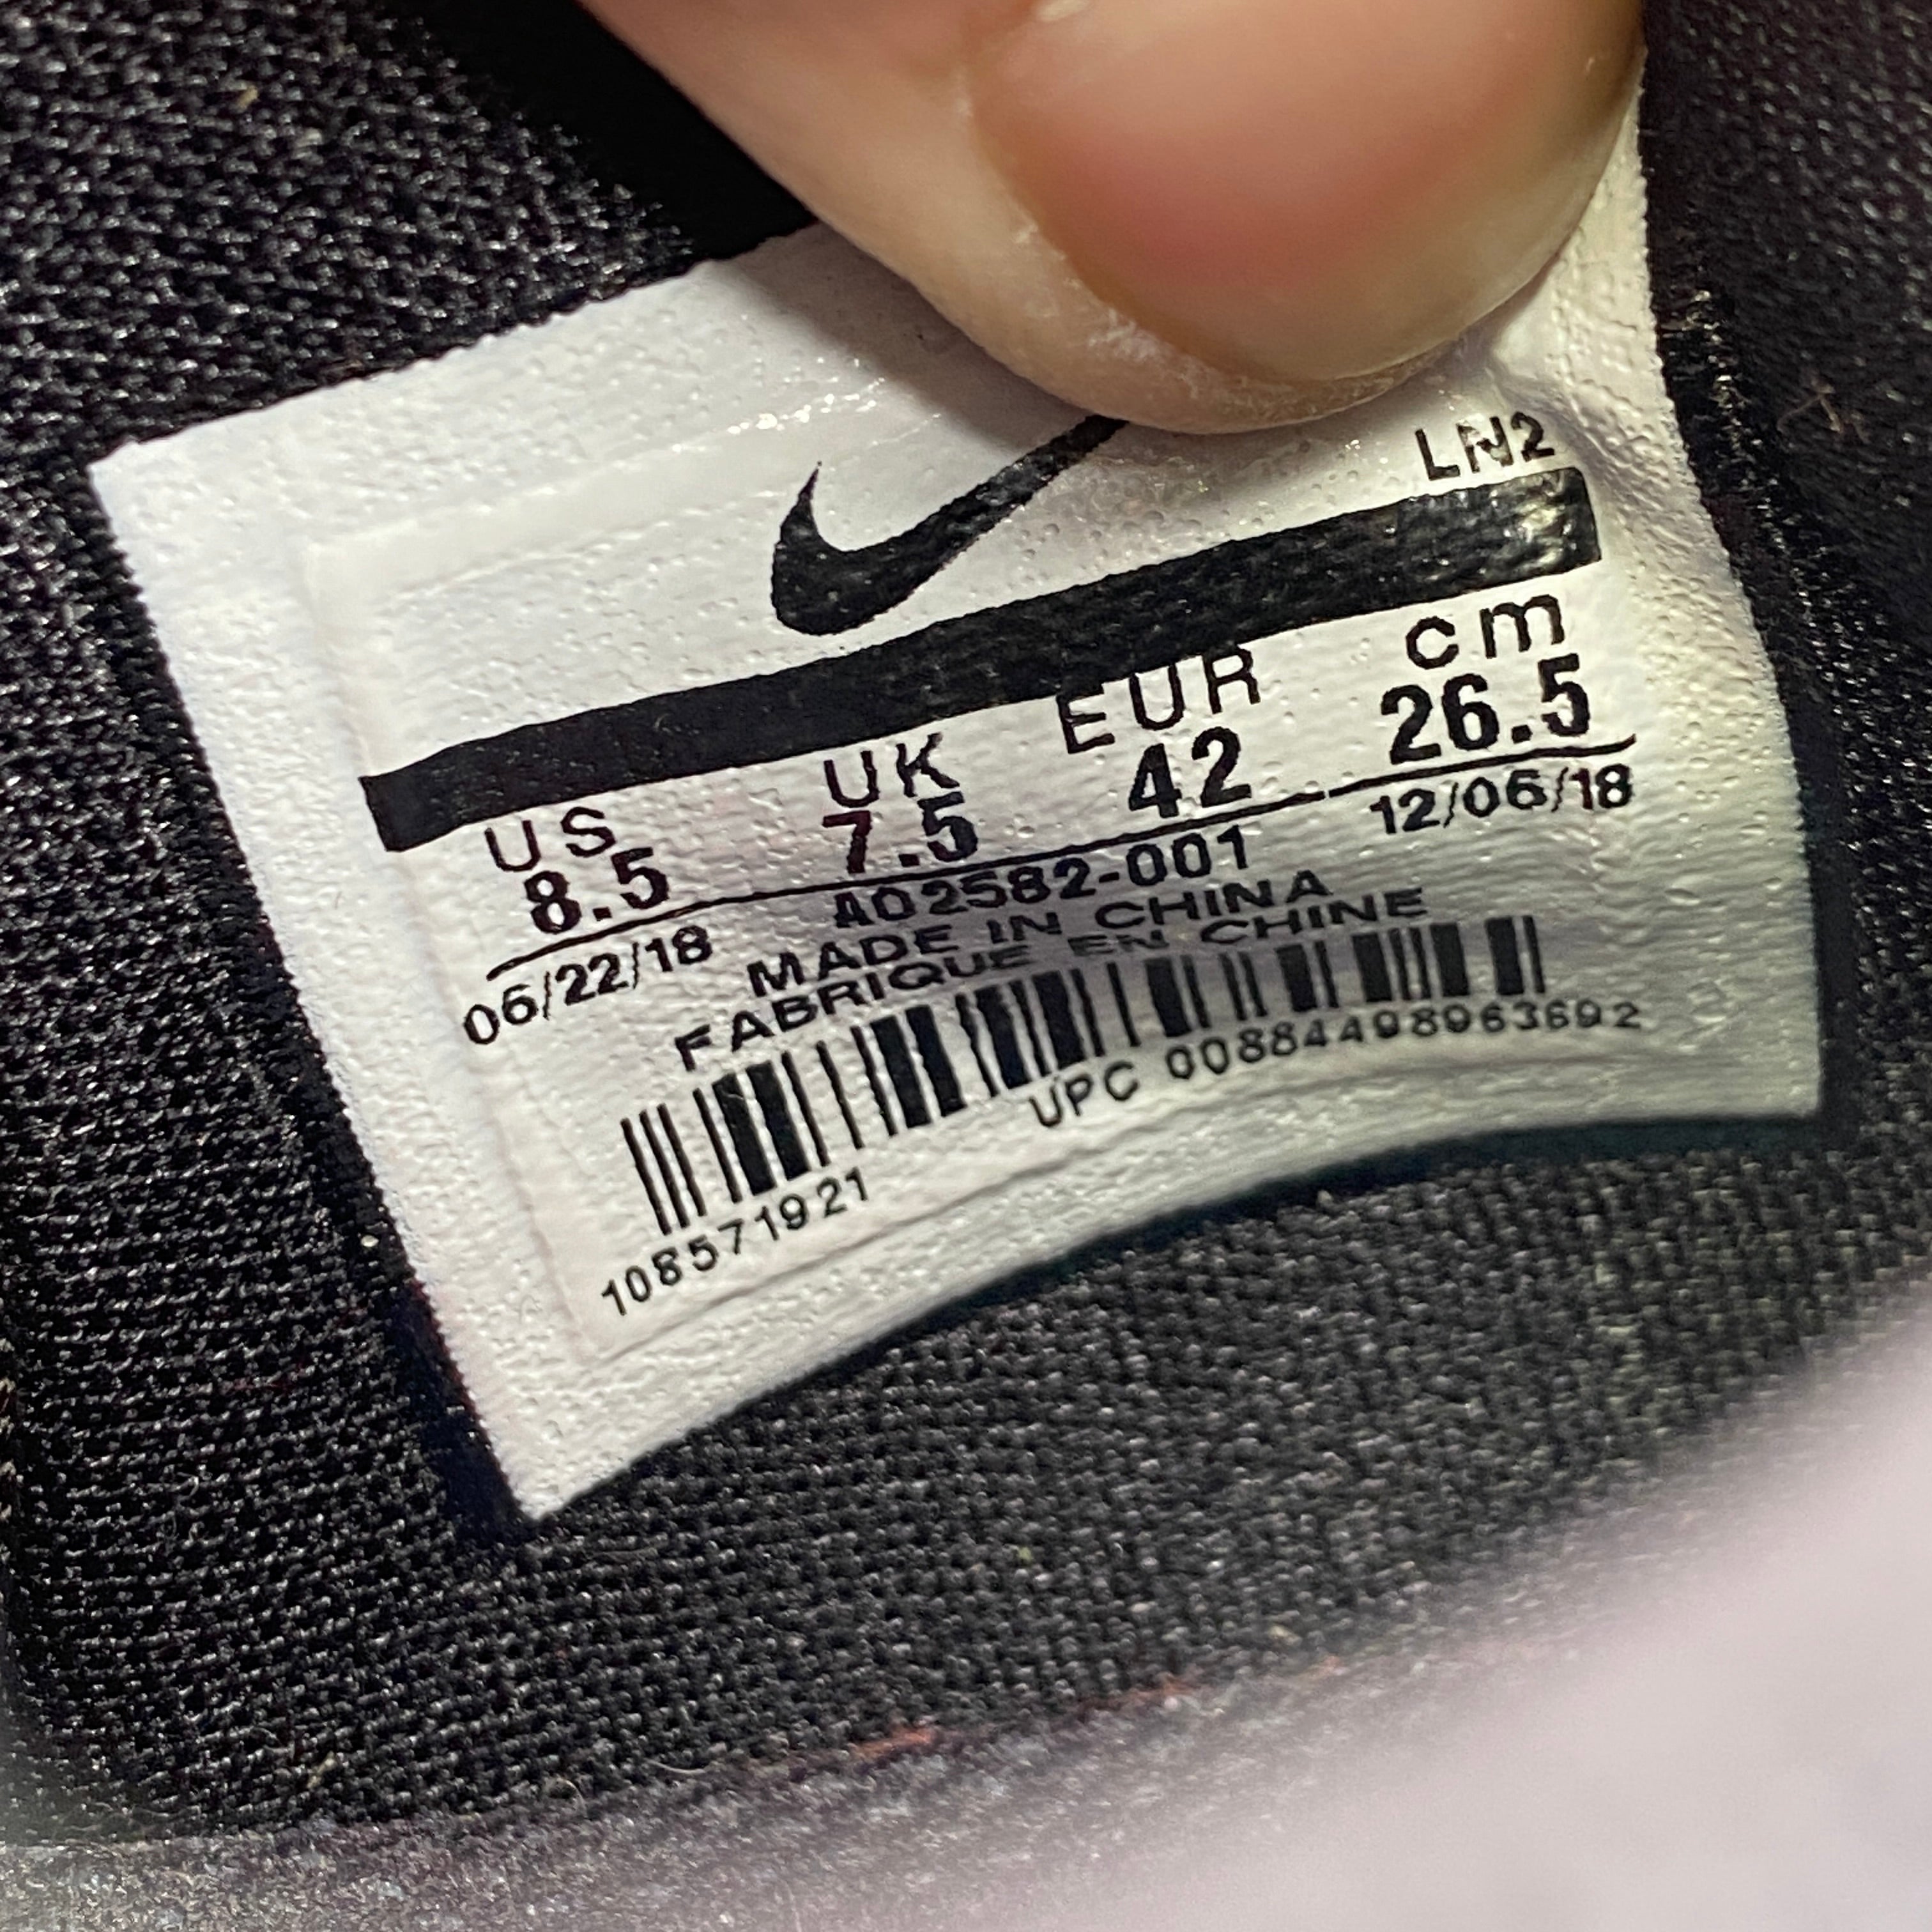 Nike Adapt BB &quot;PURE PLATINUM&quot; 2019 Used Size 8.5